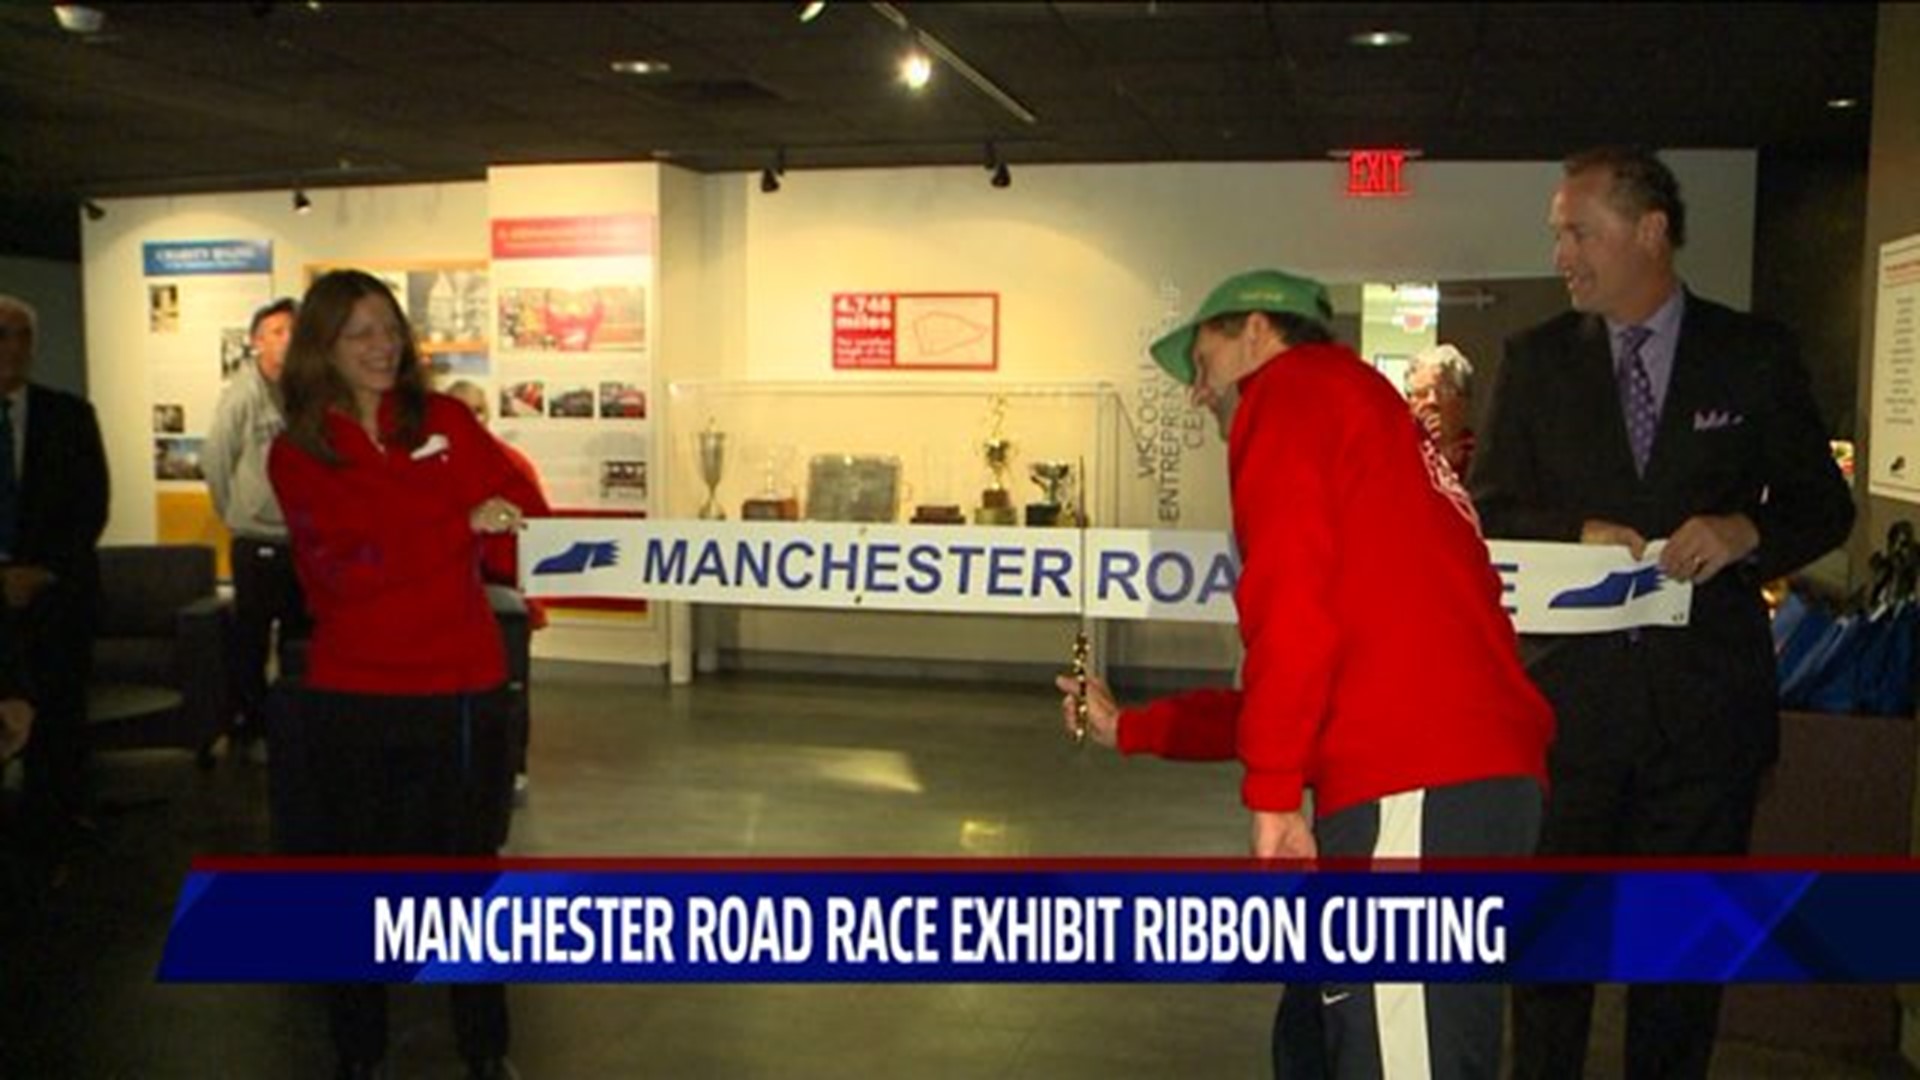 Manchester Road Race exhibit unveiled